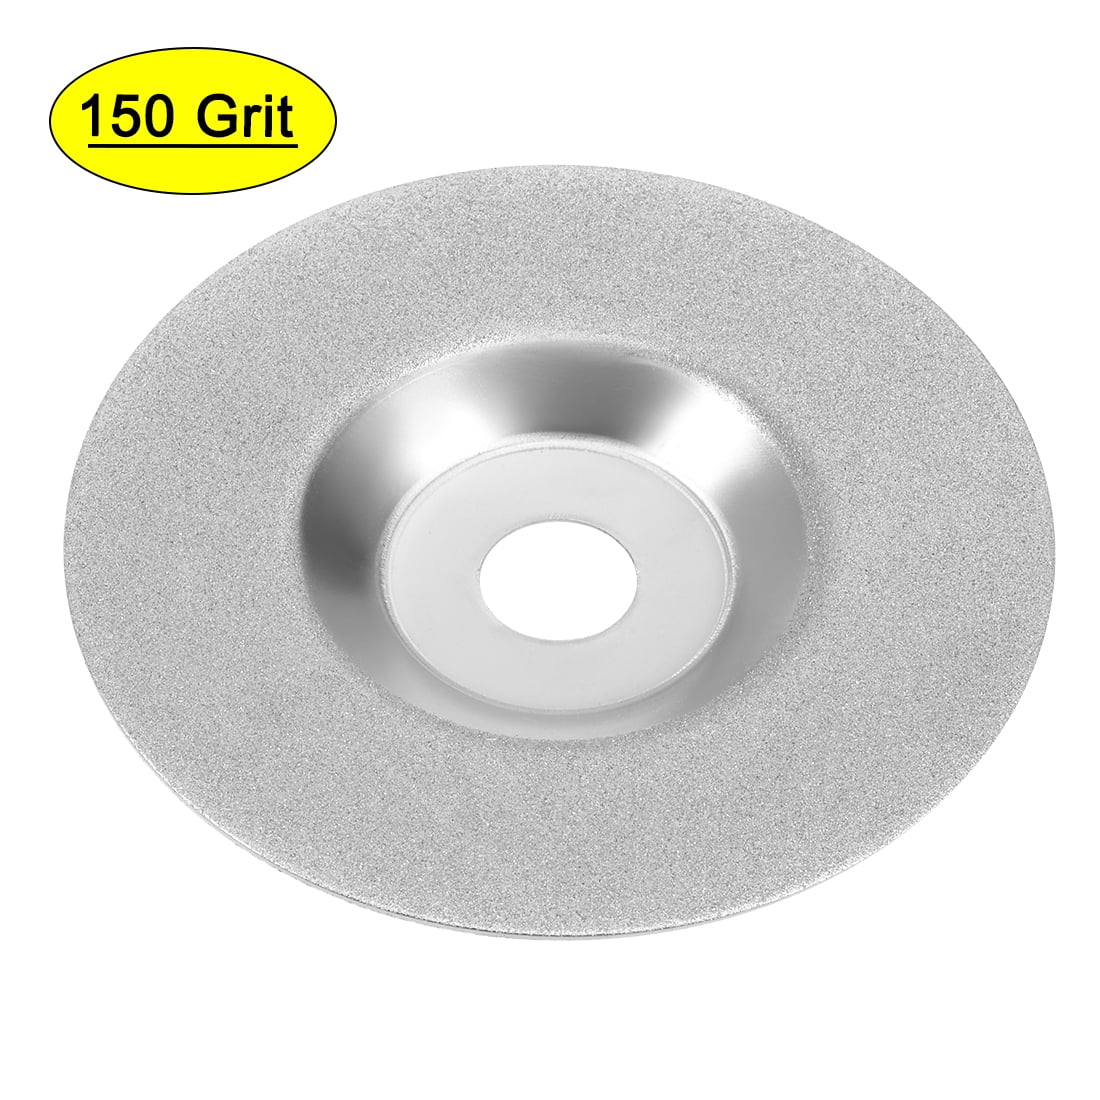 4" inch Diamond Grinding Wheel Coated FLAT Cutting Disc Saw Grit 150 Threading 